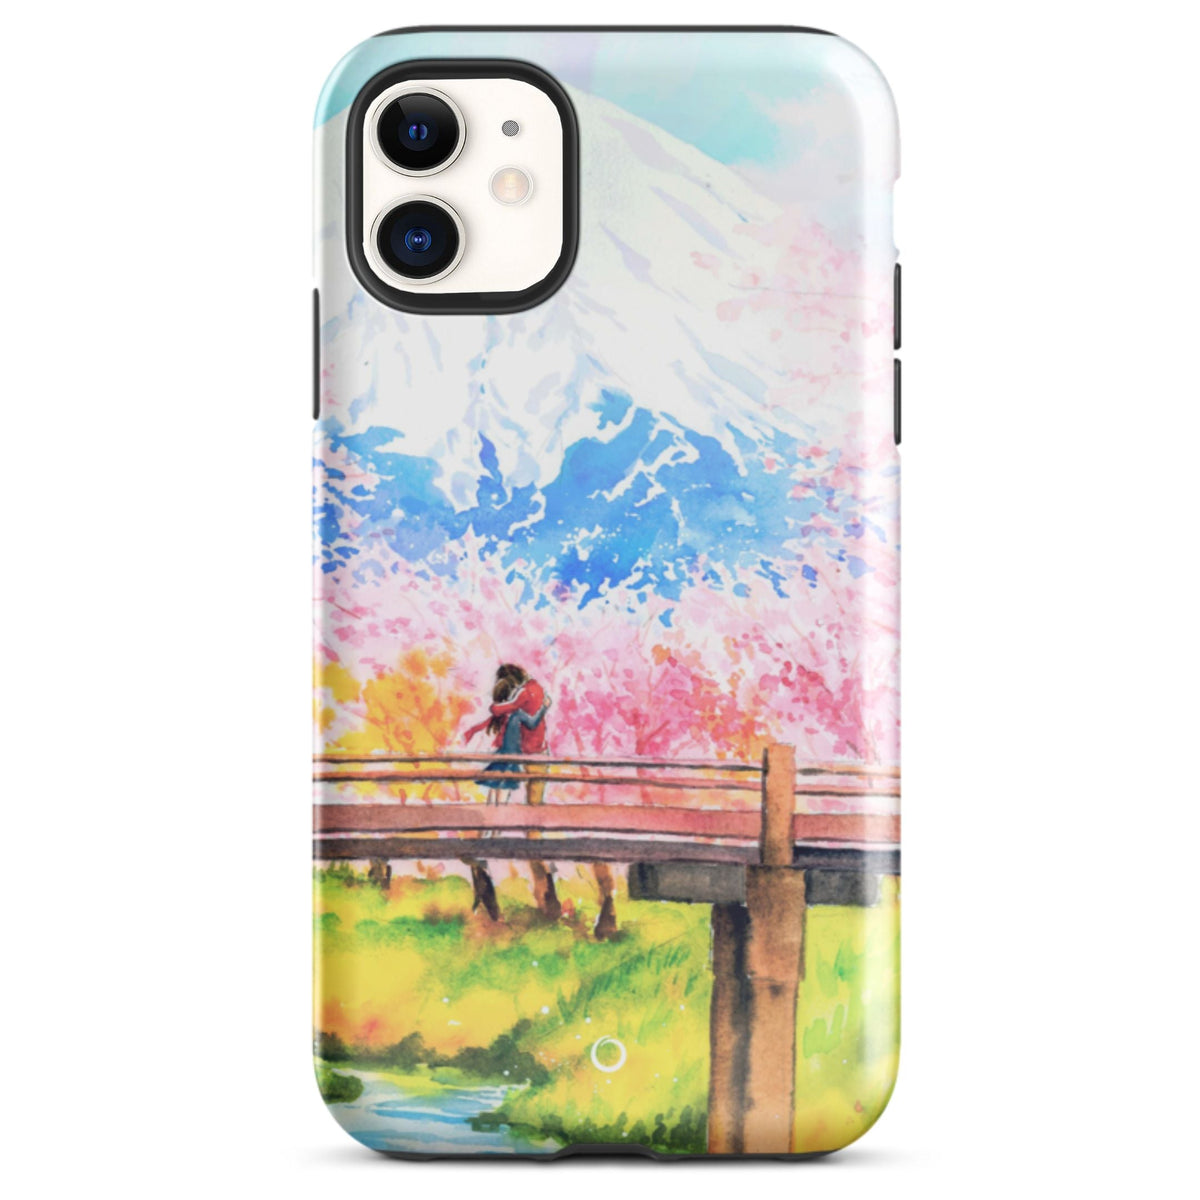 Sakura Dreamscape iPhone Case - iPhone 12